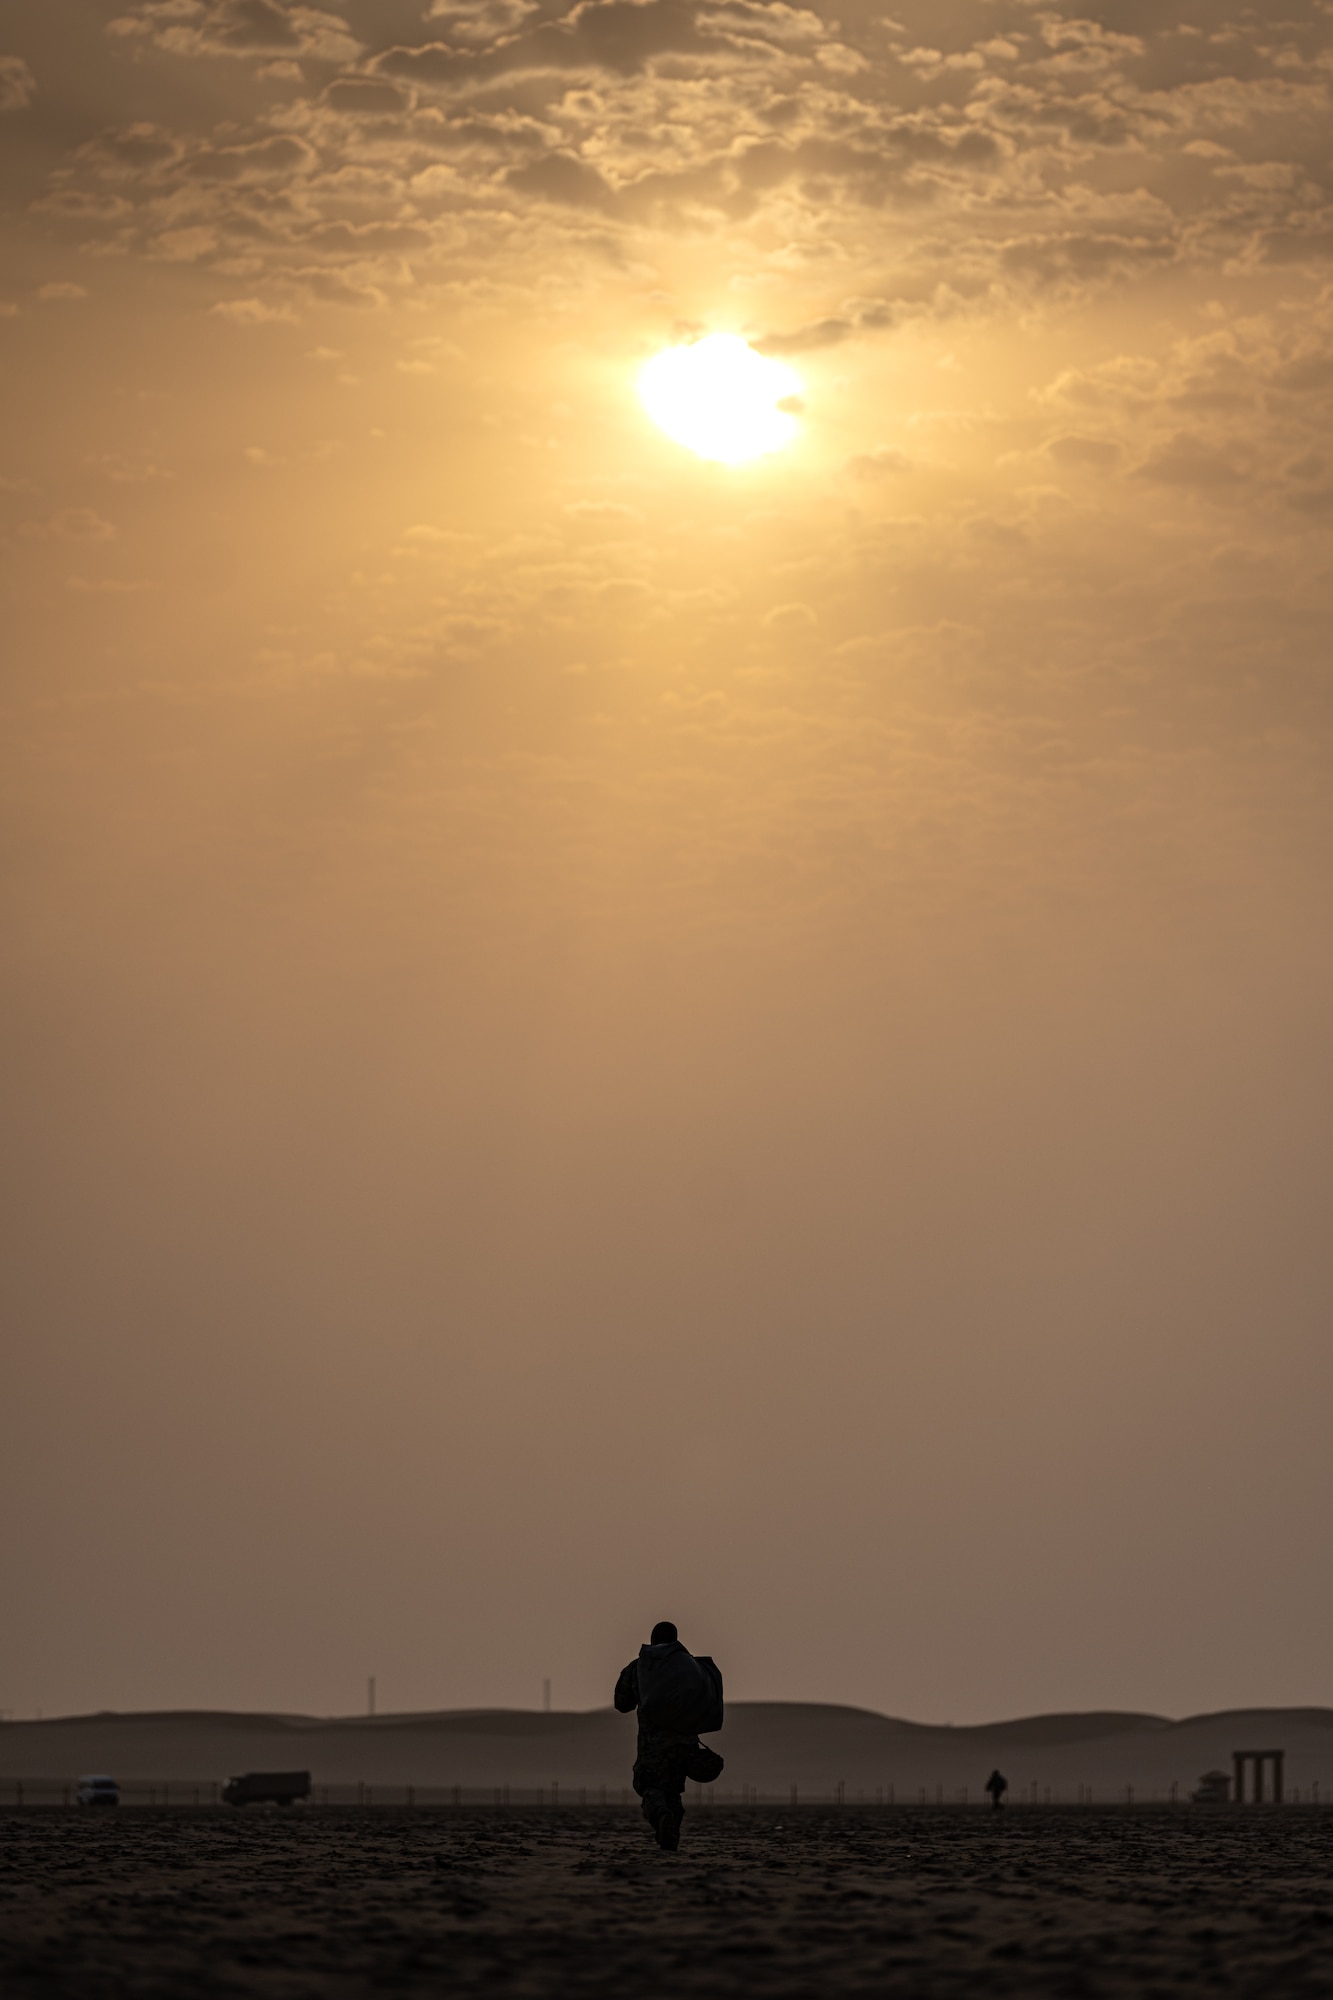 Person walking toward the sun in a desert